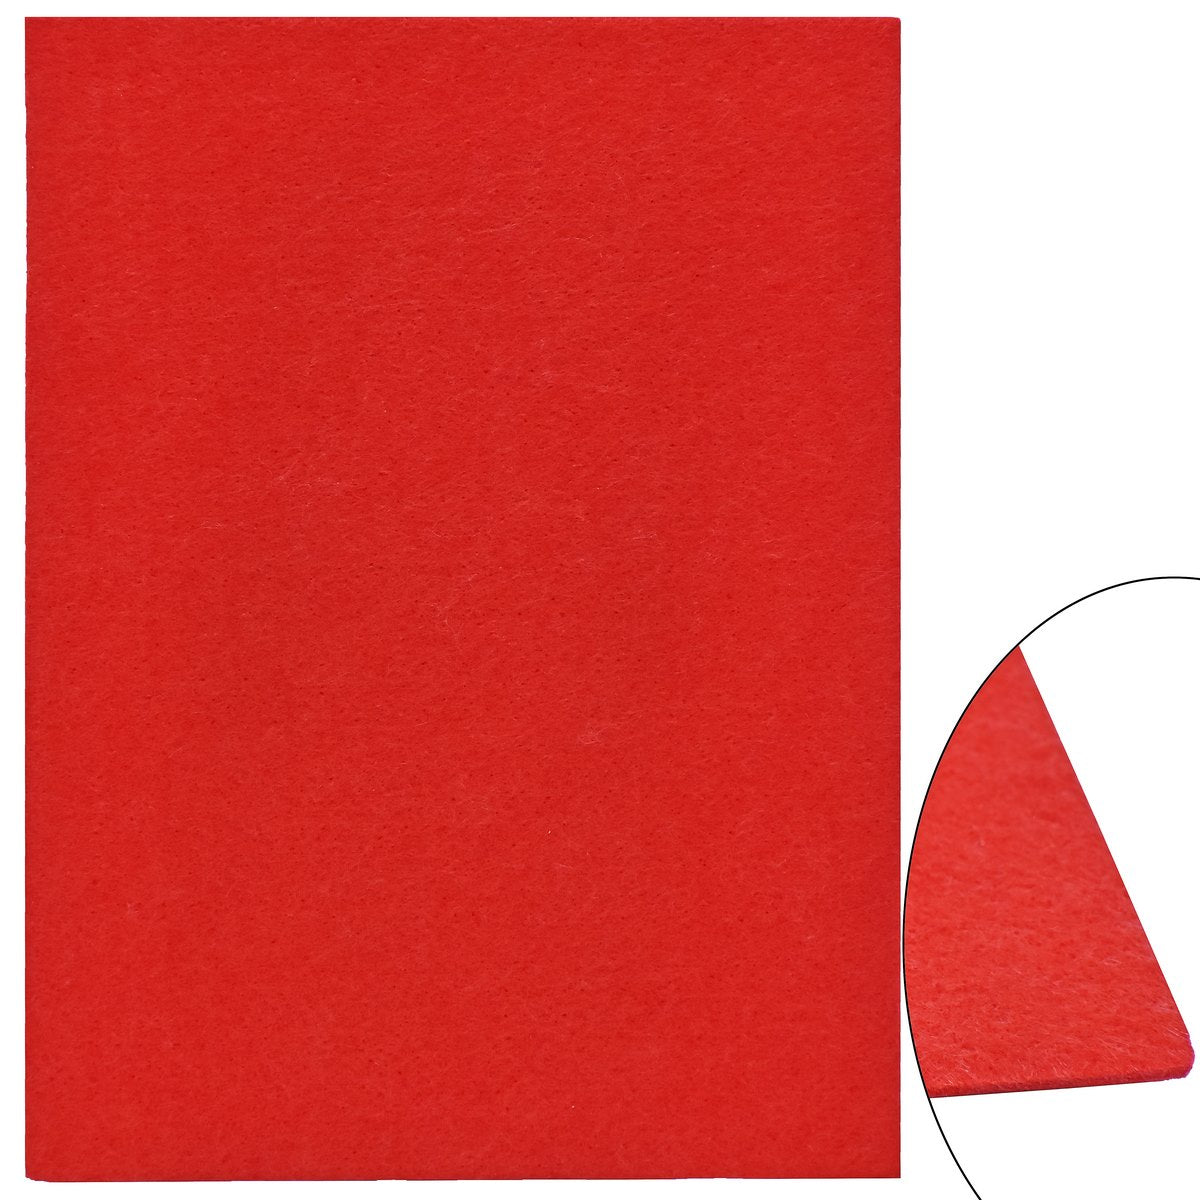 jags-mumbai Non-Woven & Felt Sheets A4 Nonwoven Felt Sheet 3 MM 1 Pcs Red